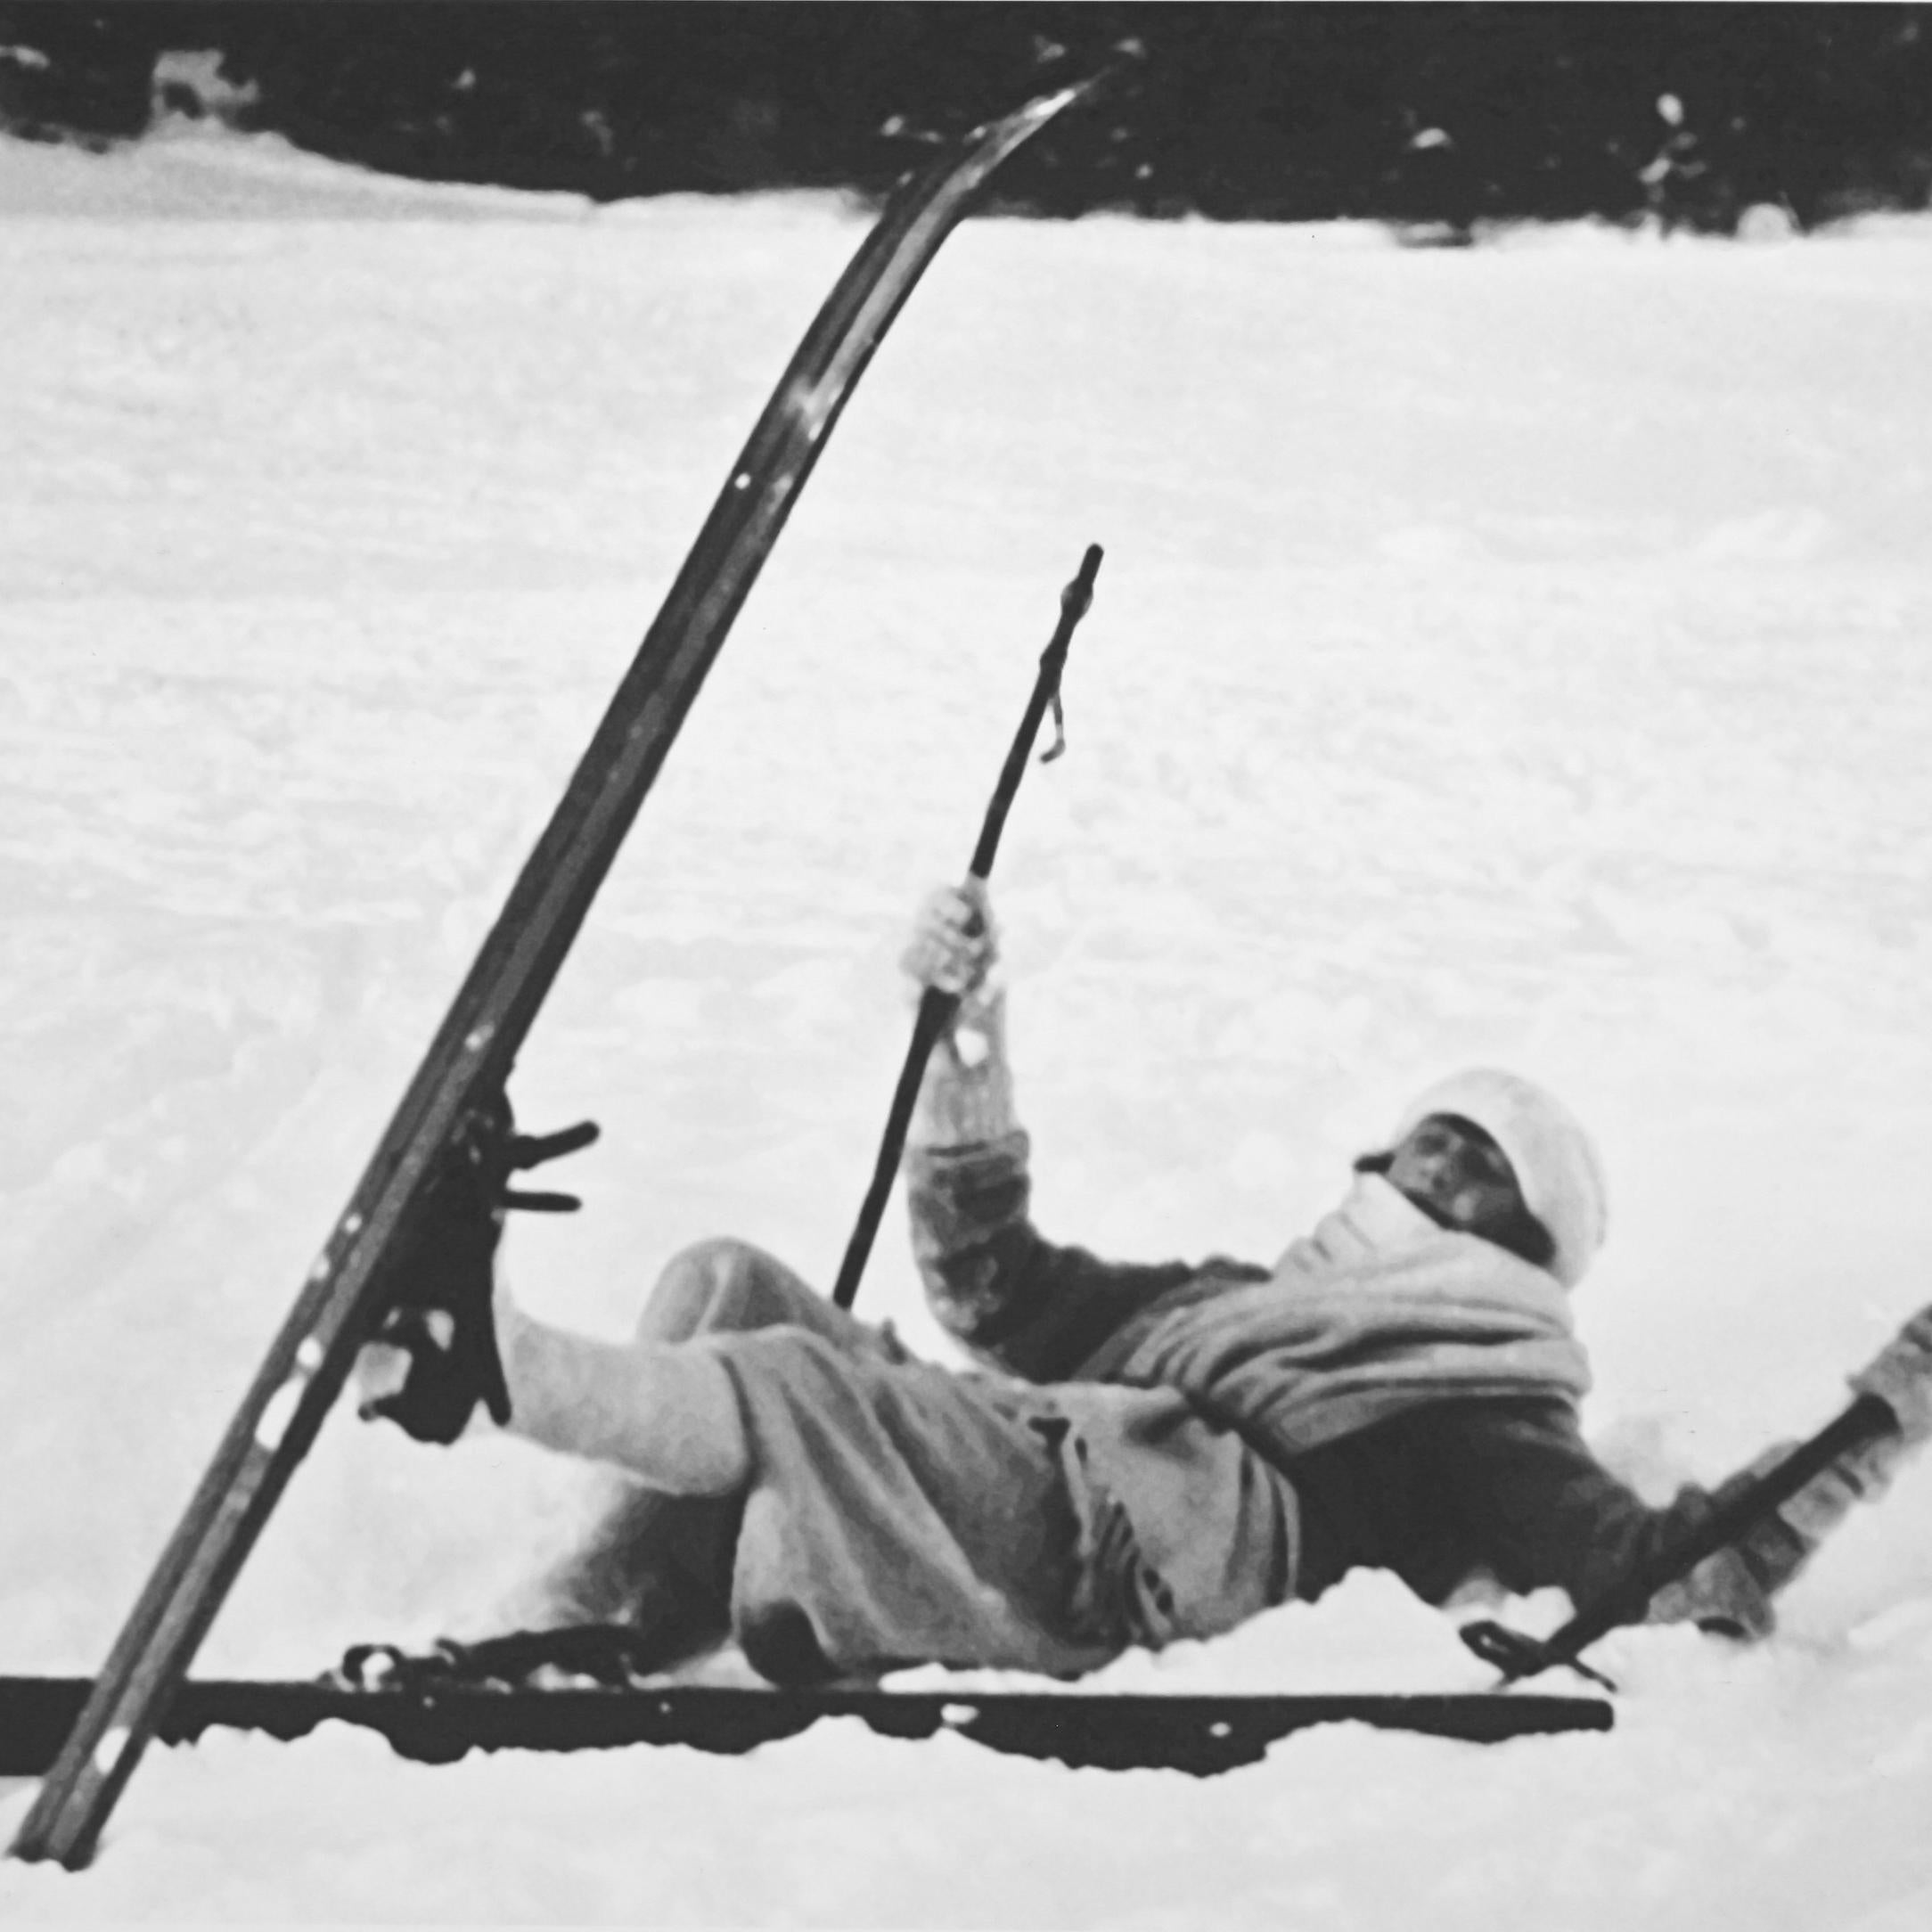 English Alpine Ski Photograph, 'OPPS! Taken from Original 1930s Photograph